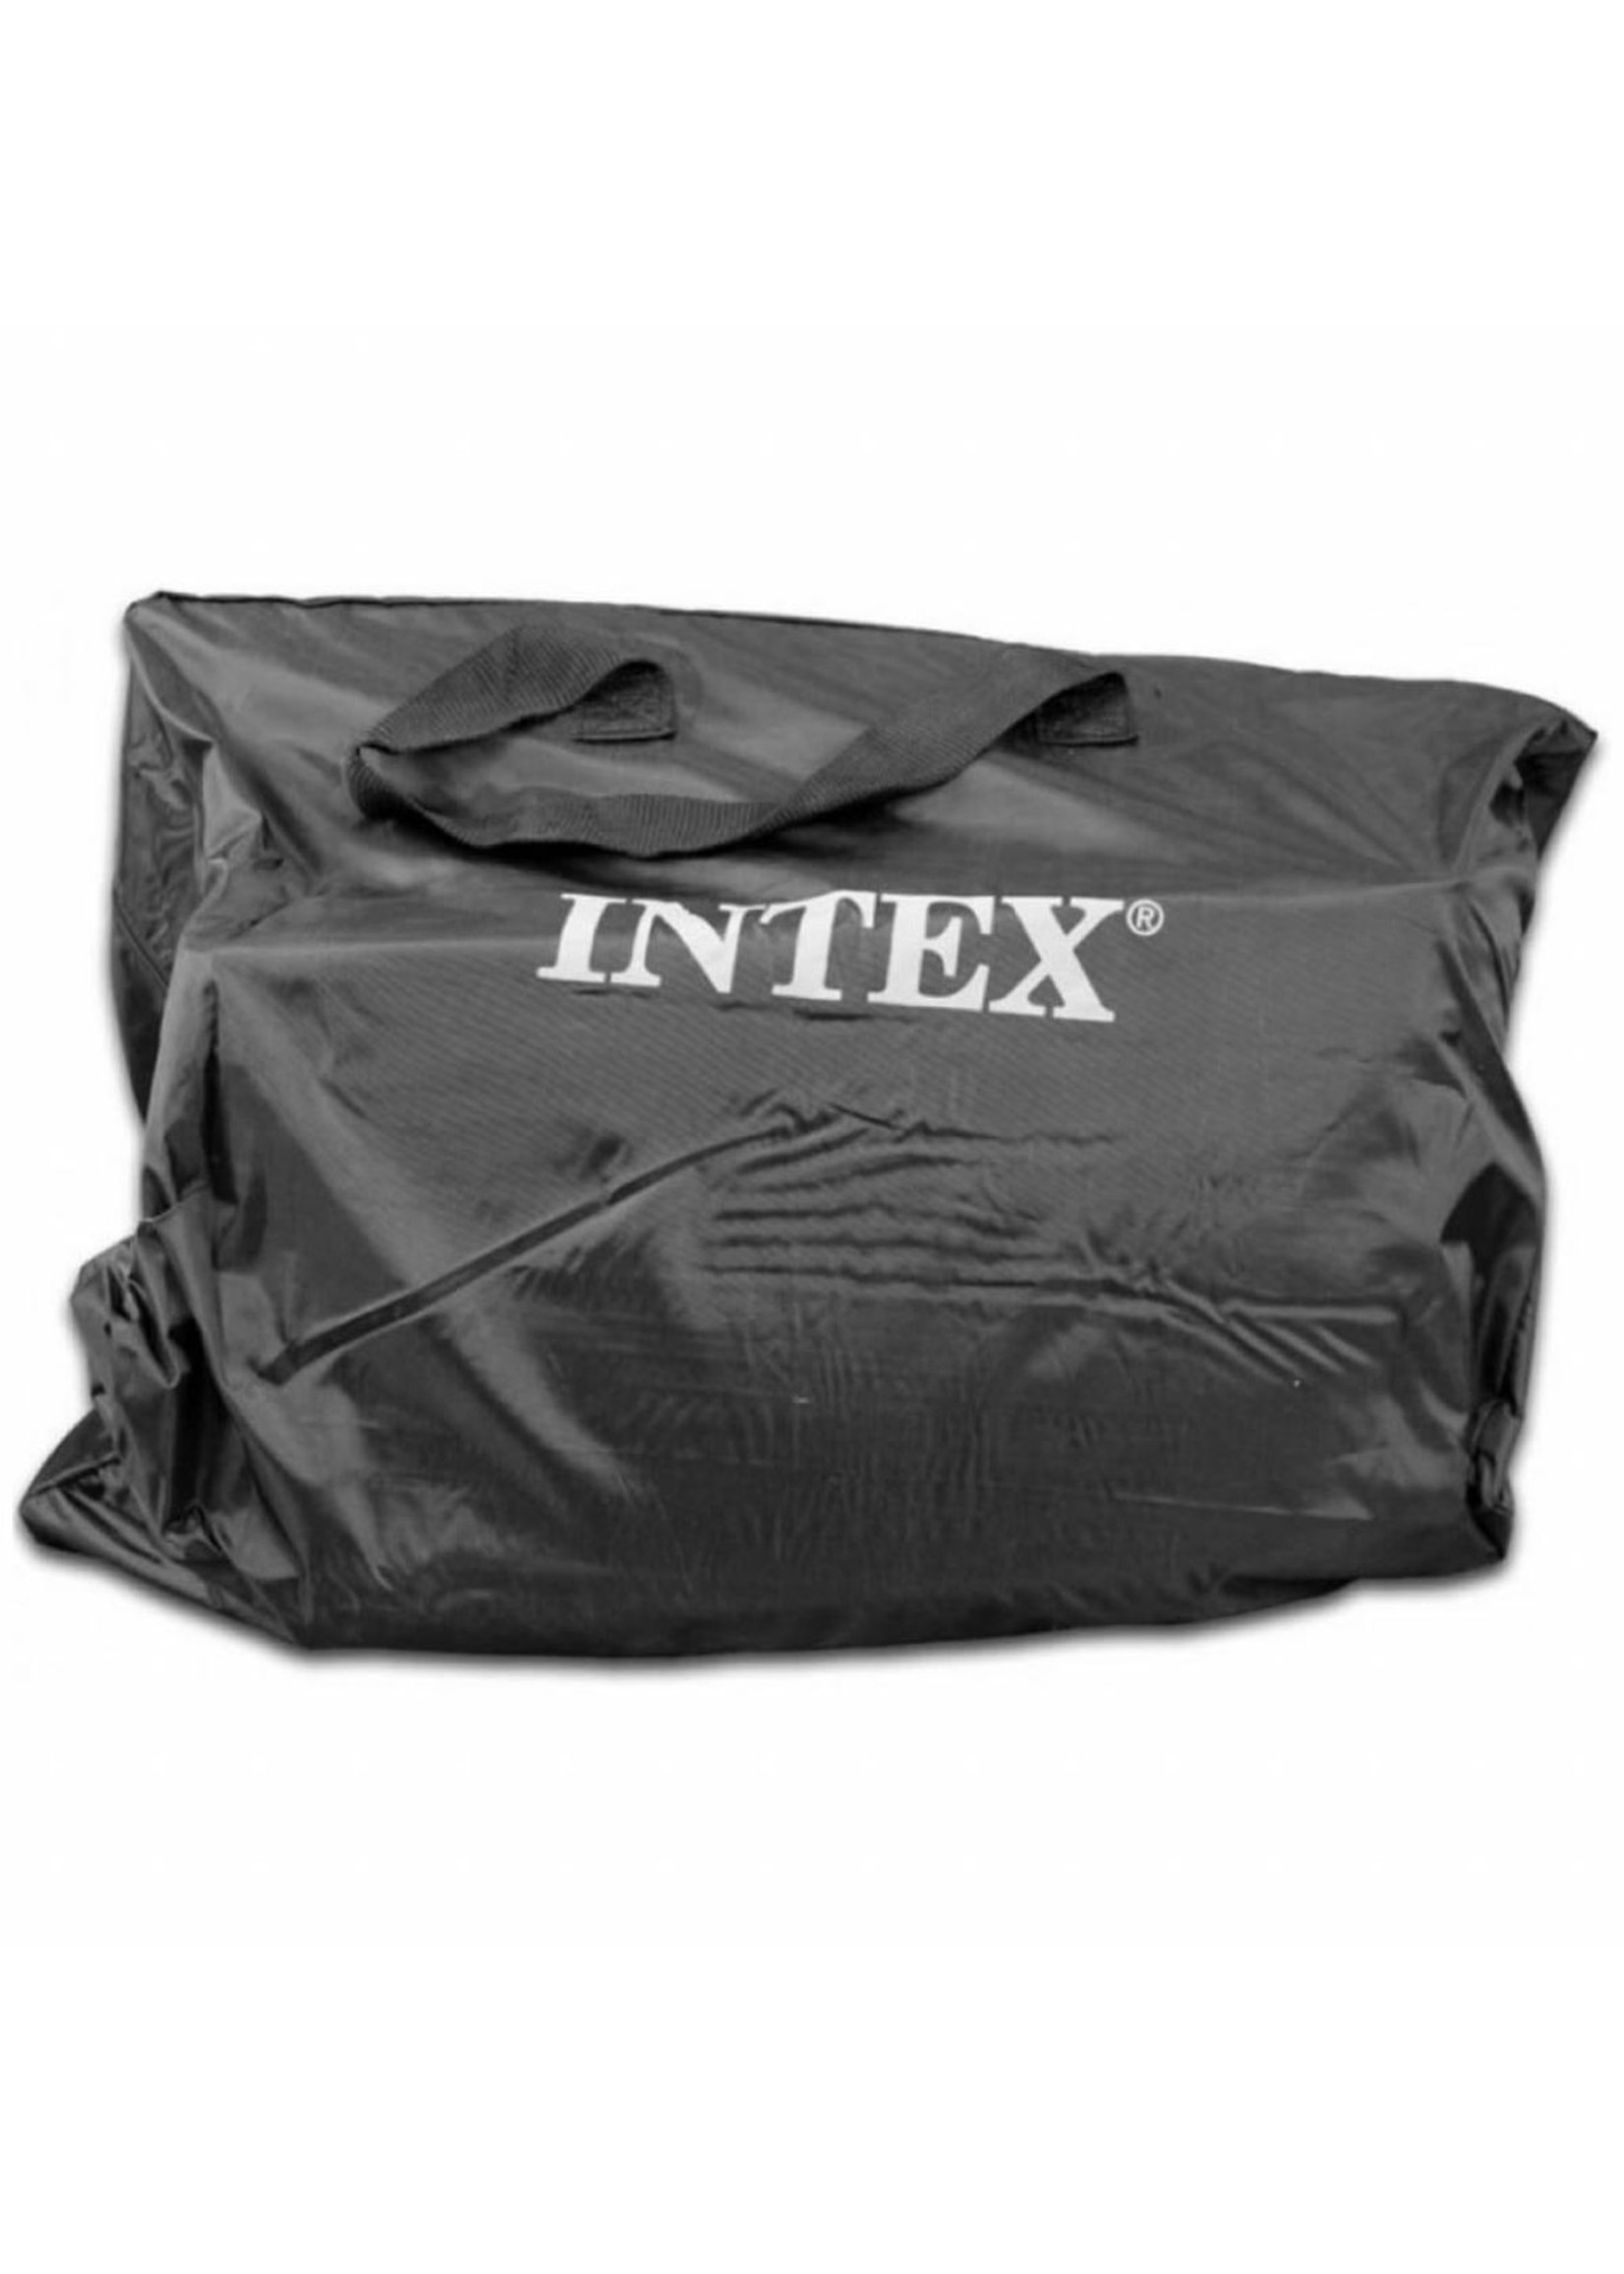 Intex Intex Challenger K! KAYAK